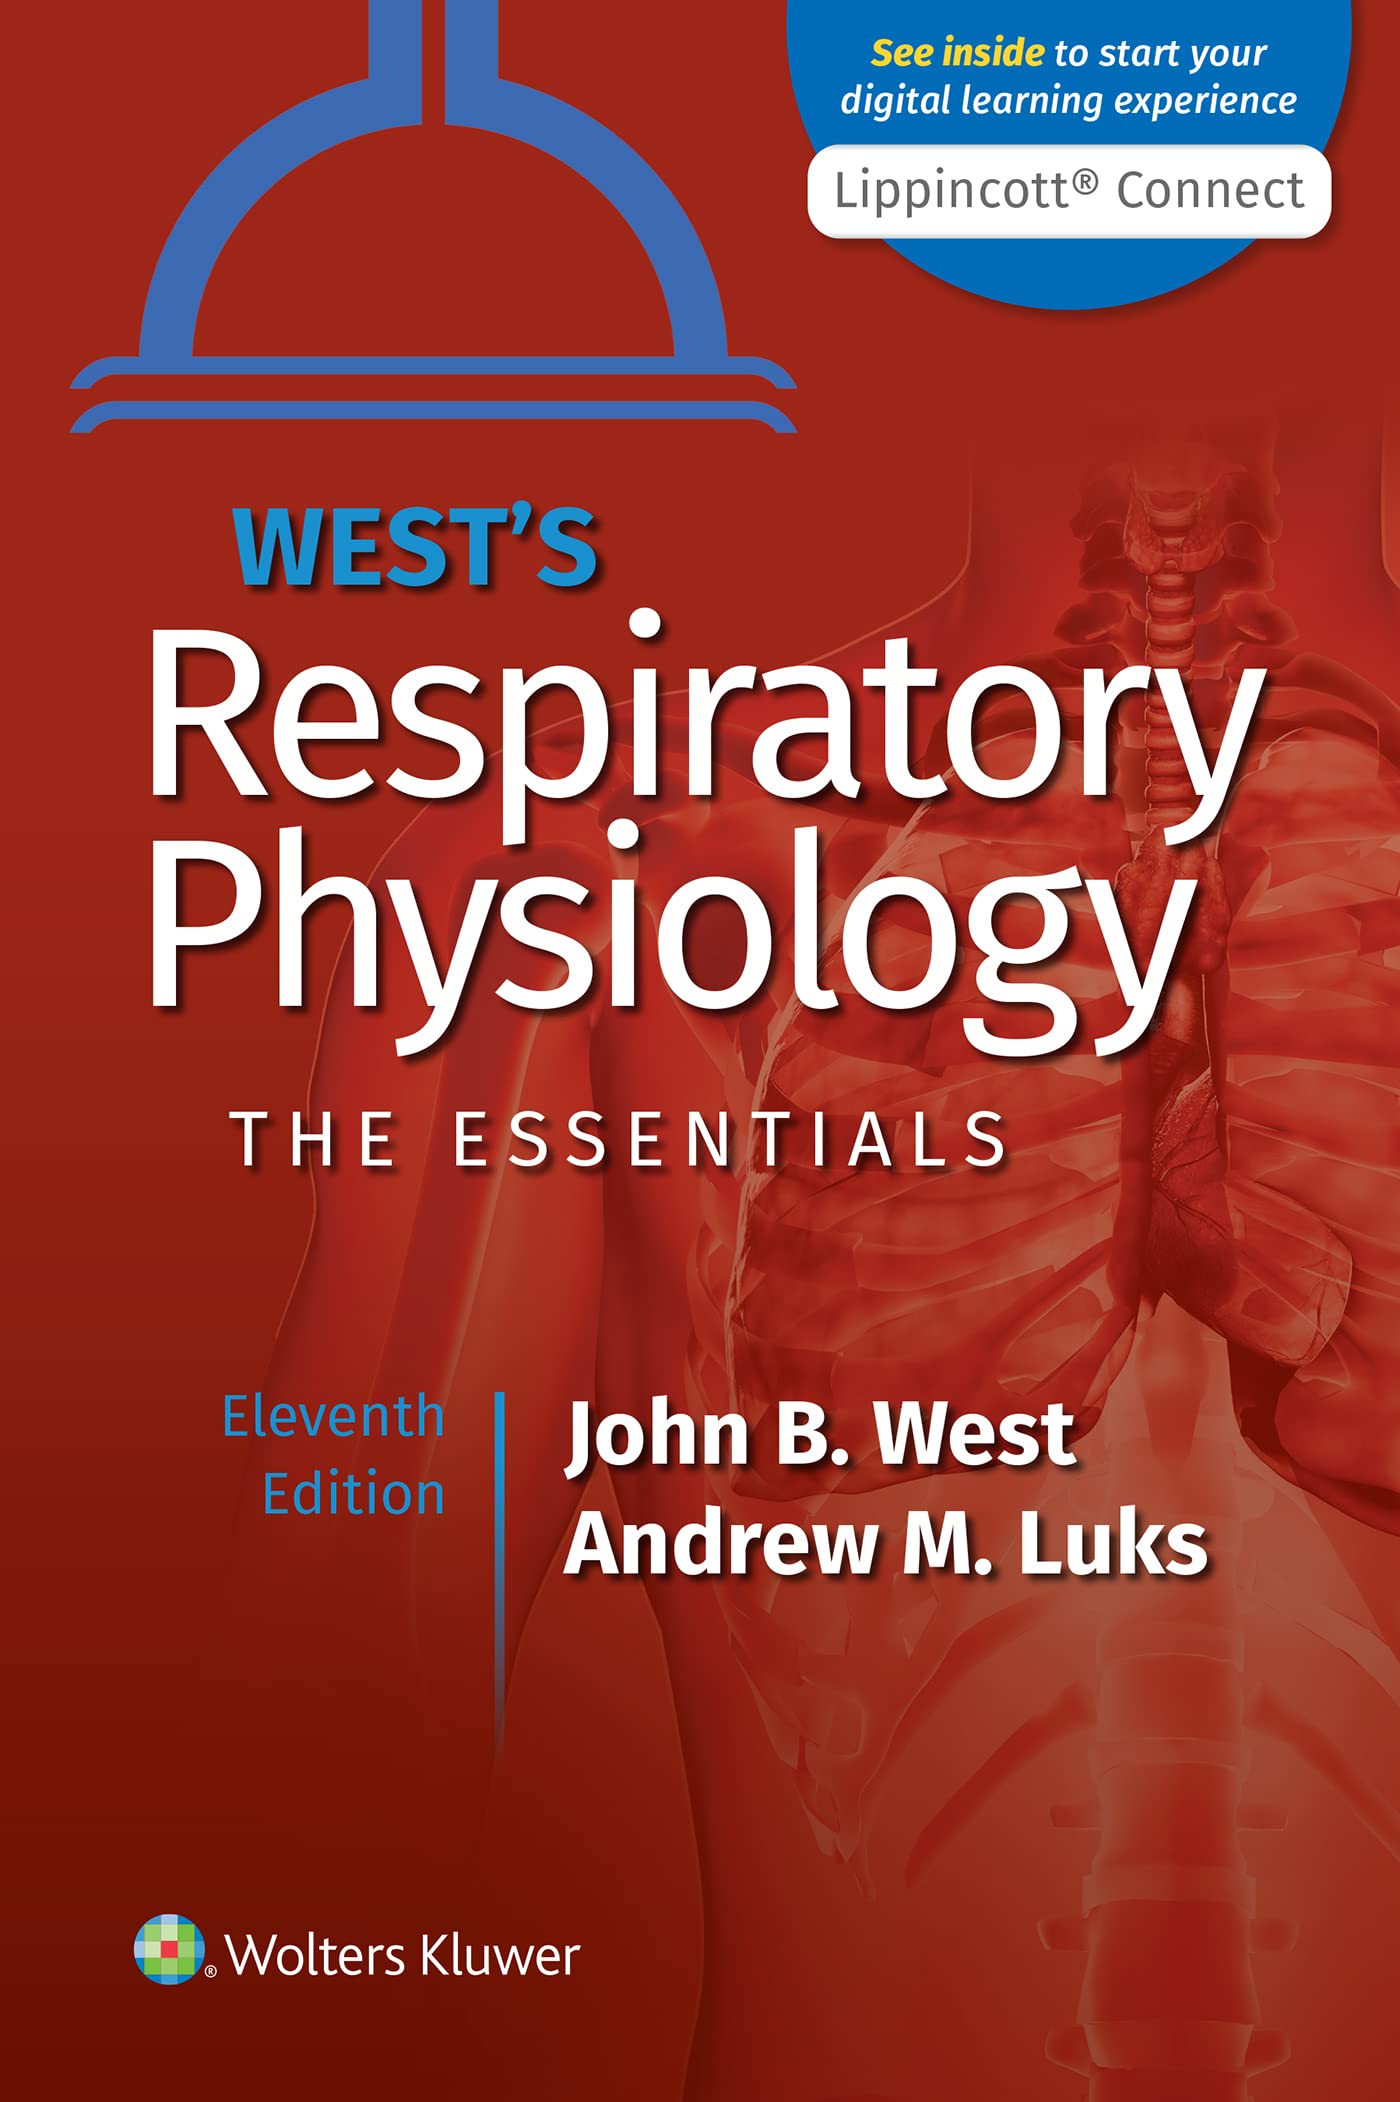 Respiratory physiology by John B. West